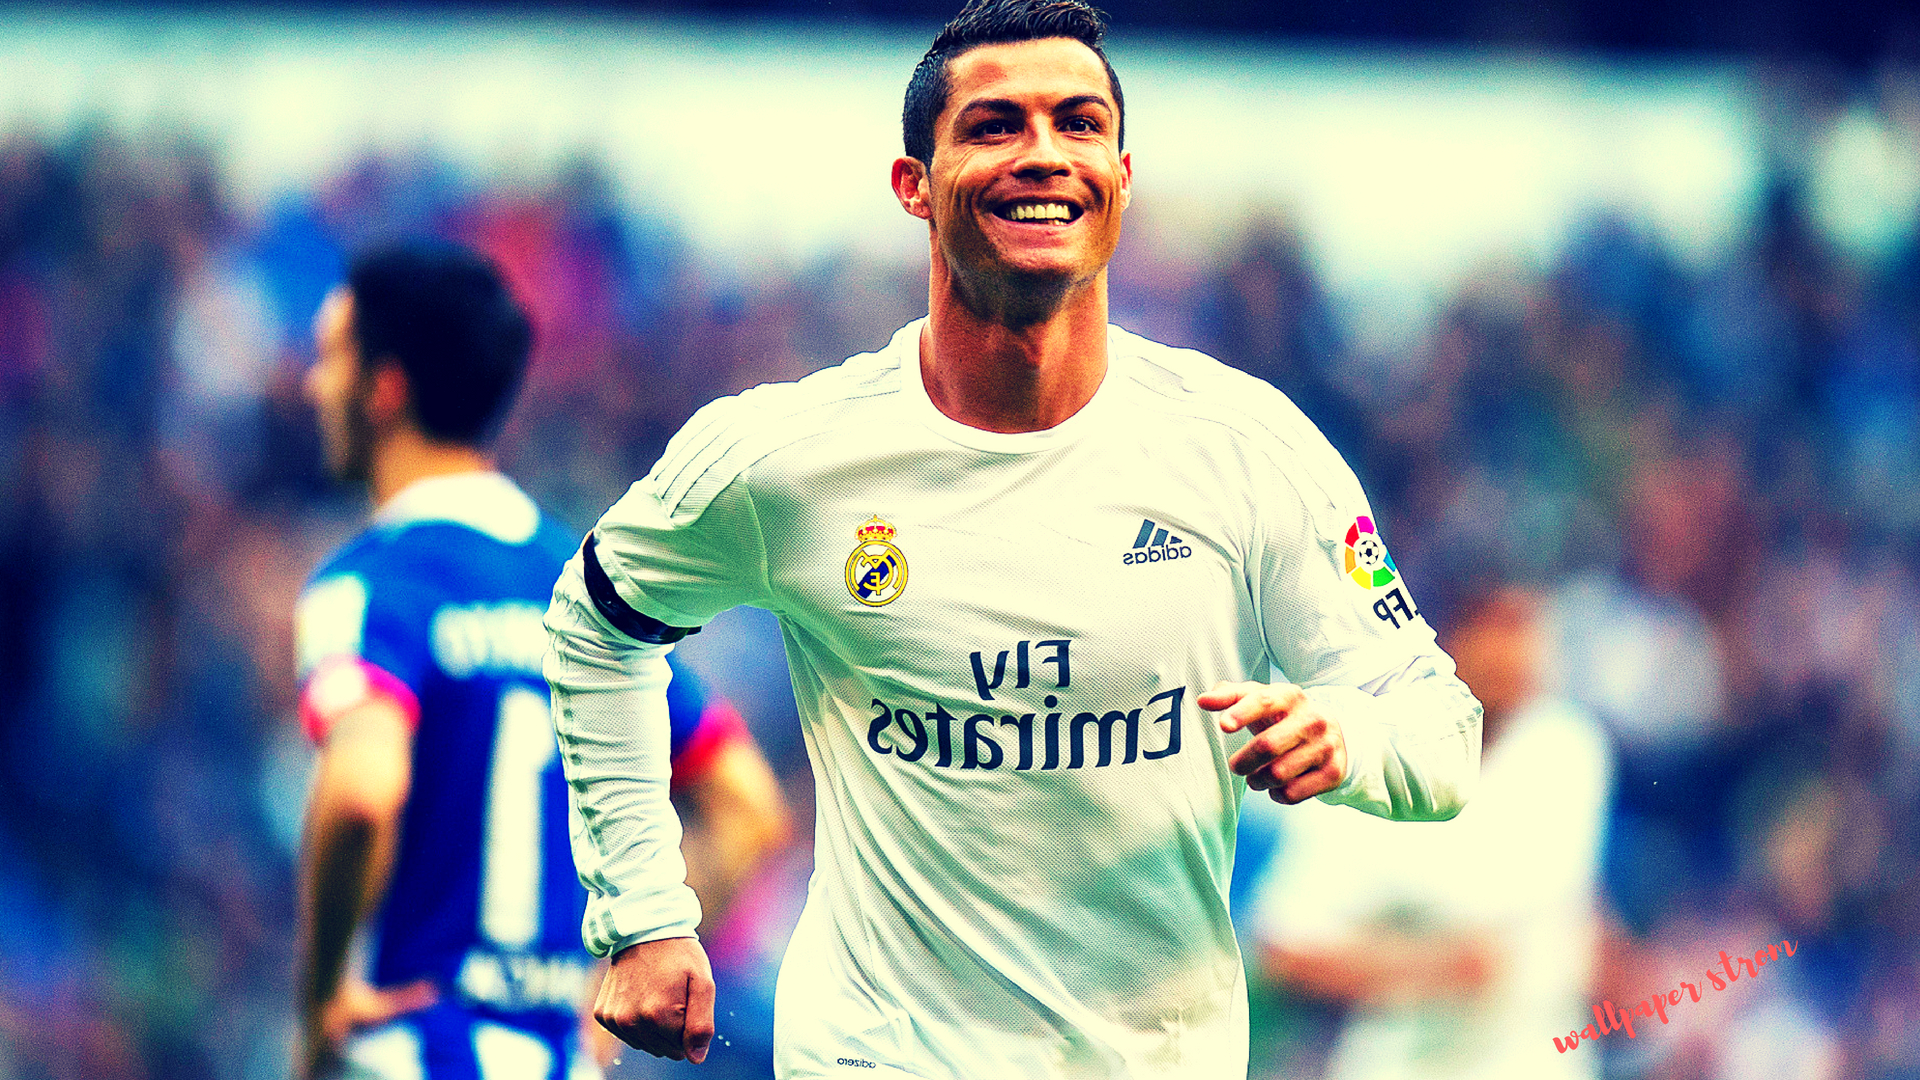 Cristiano Ronaldo Hd Wallpapers Download Free - Soccer Player - HD Wallpaper 